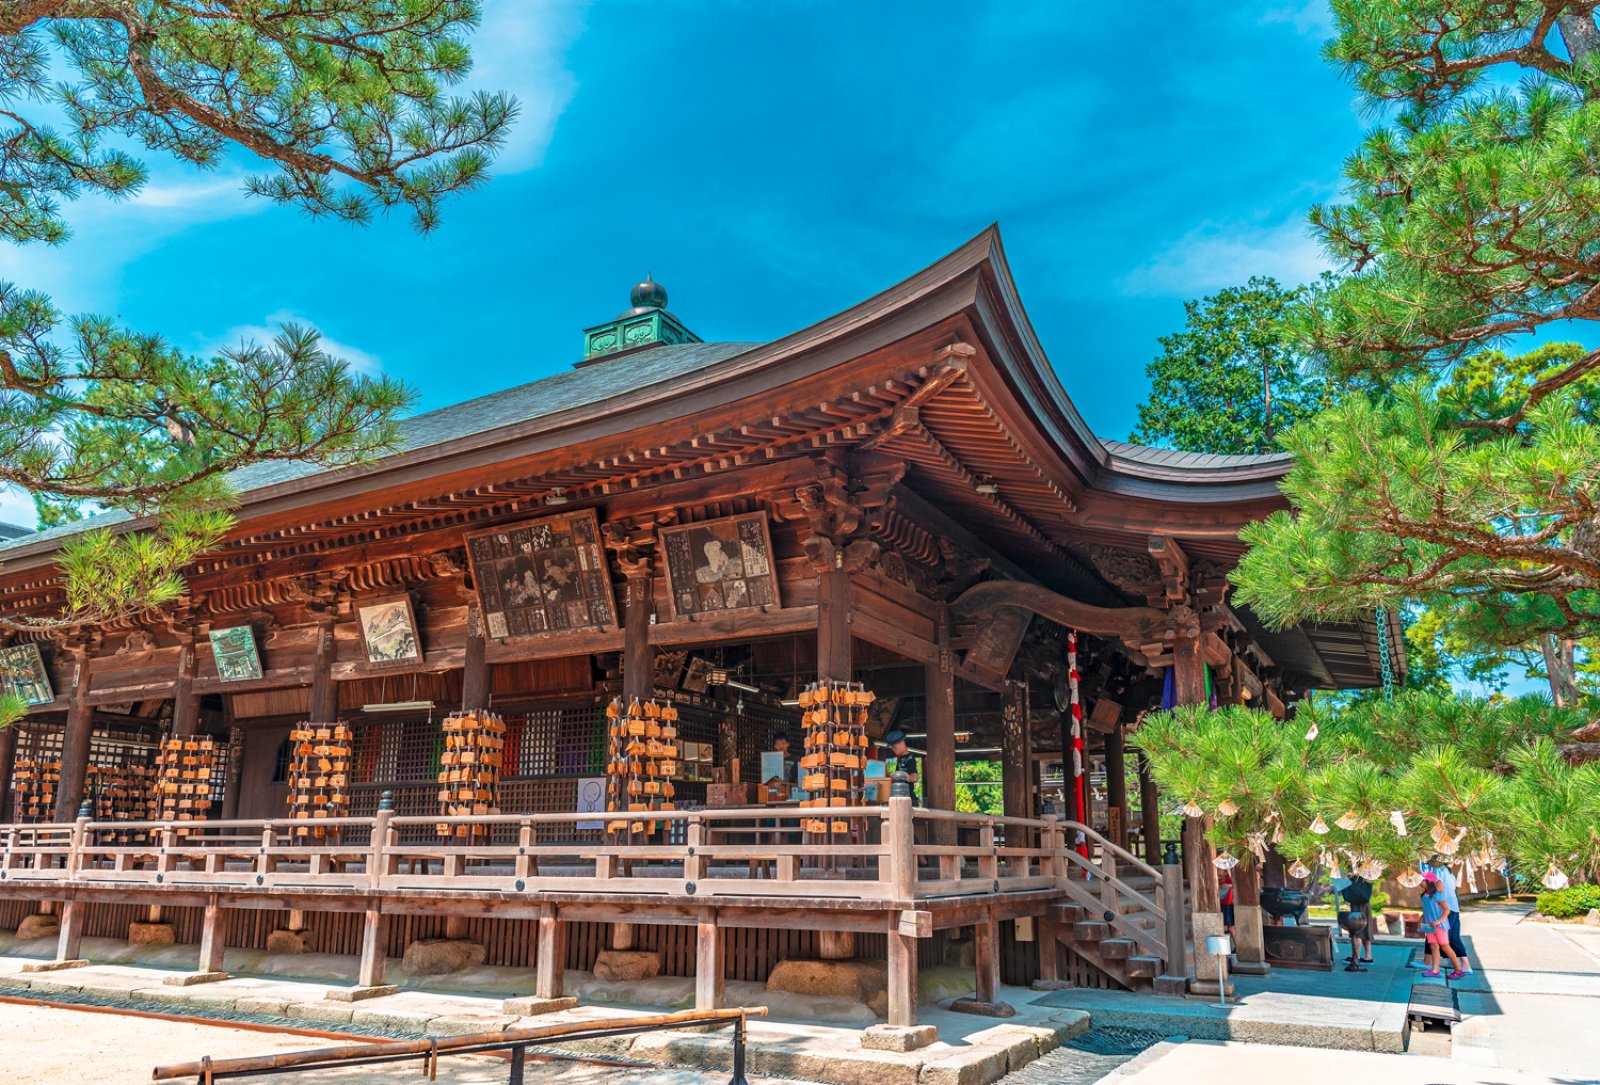 Autentico Giappone - Kyoto, Chion-Ji Temple In Miyazu City